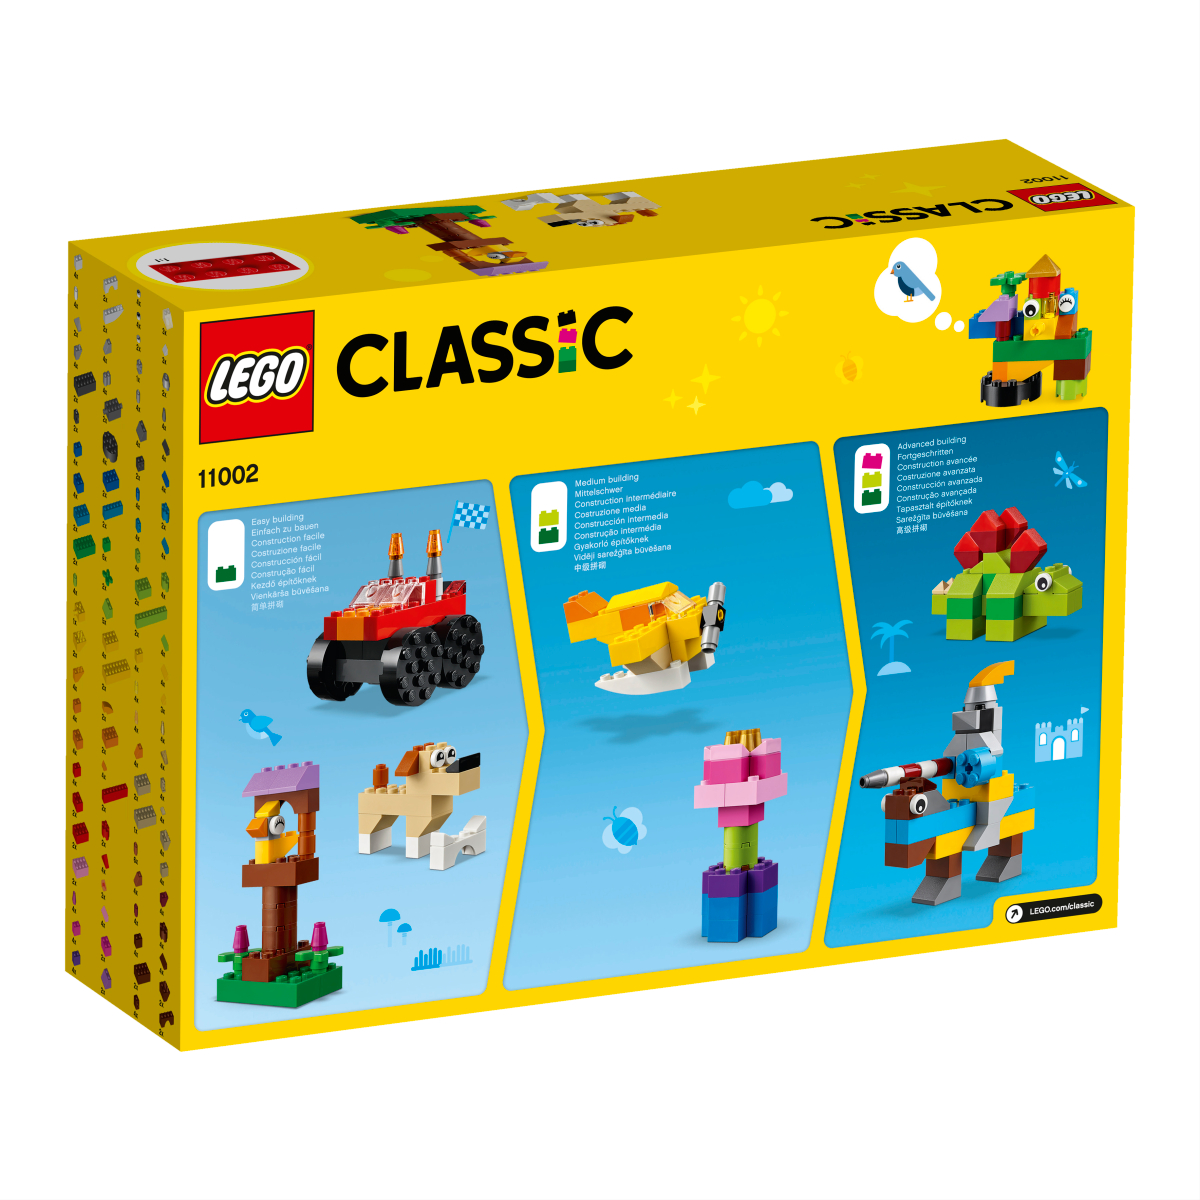 LEGO CLASSIC Конструктор "Базовый набор кубиков" 11002 - фото 4